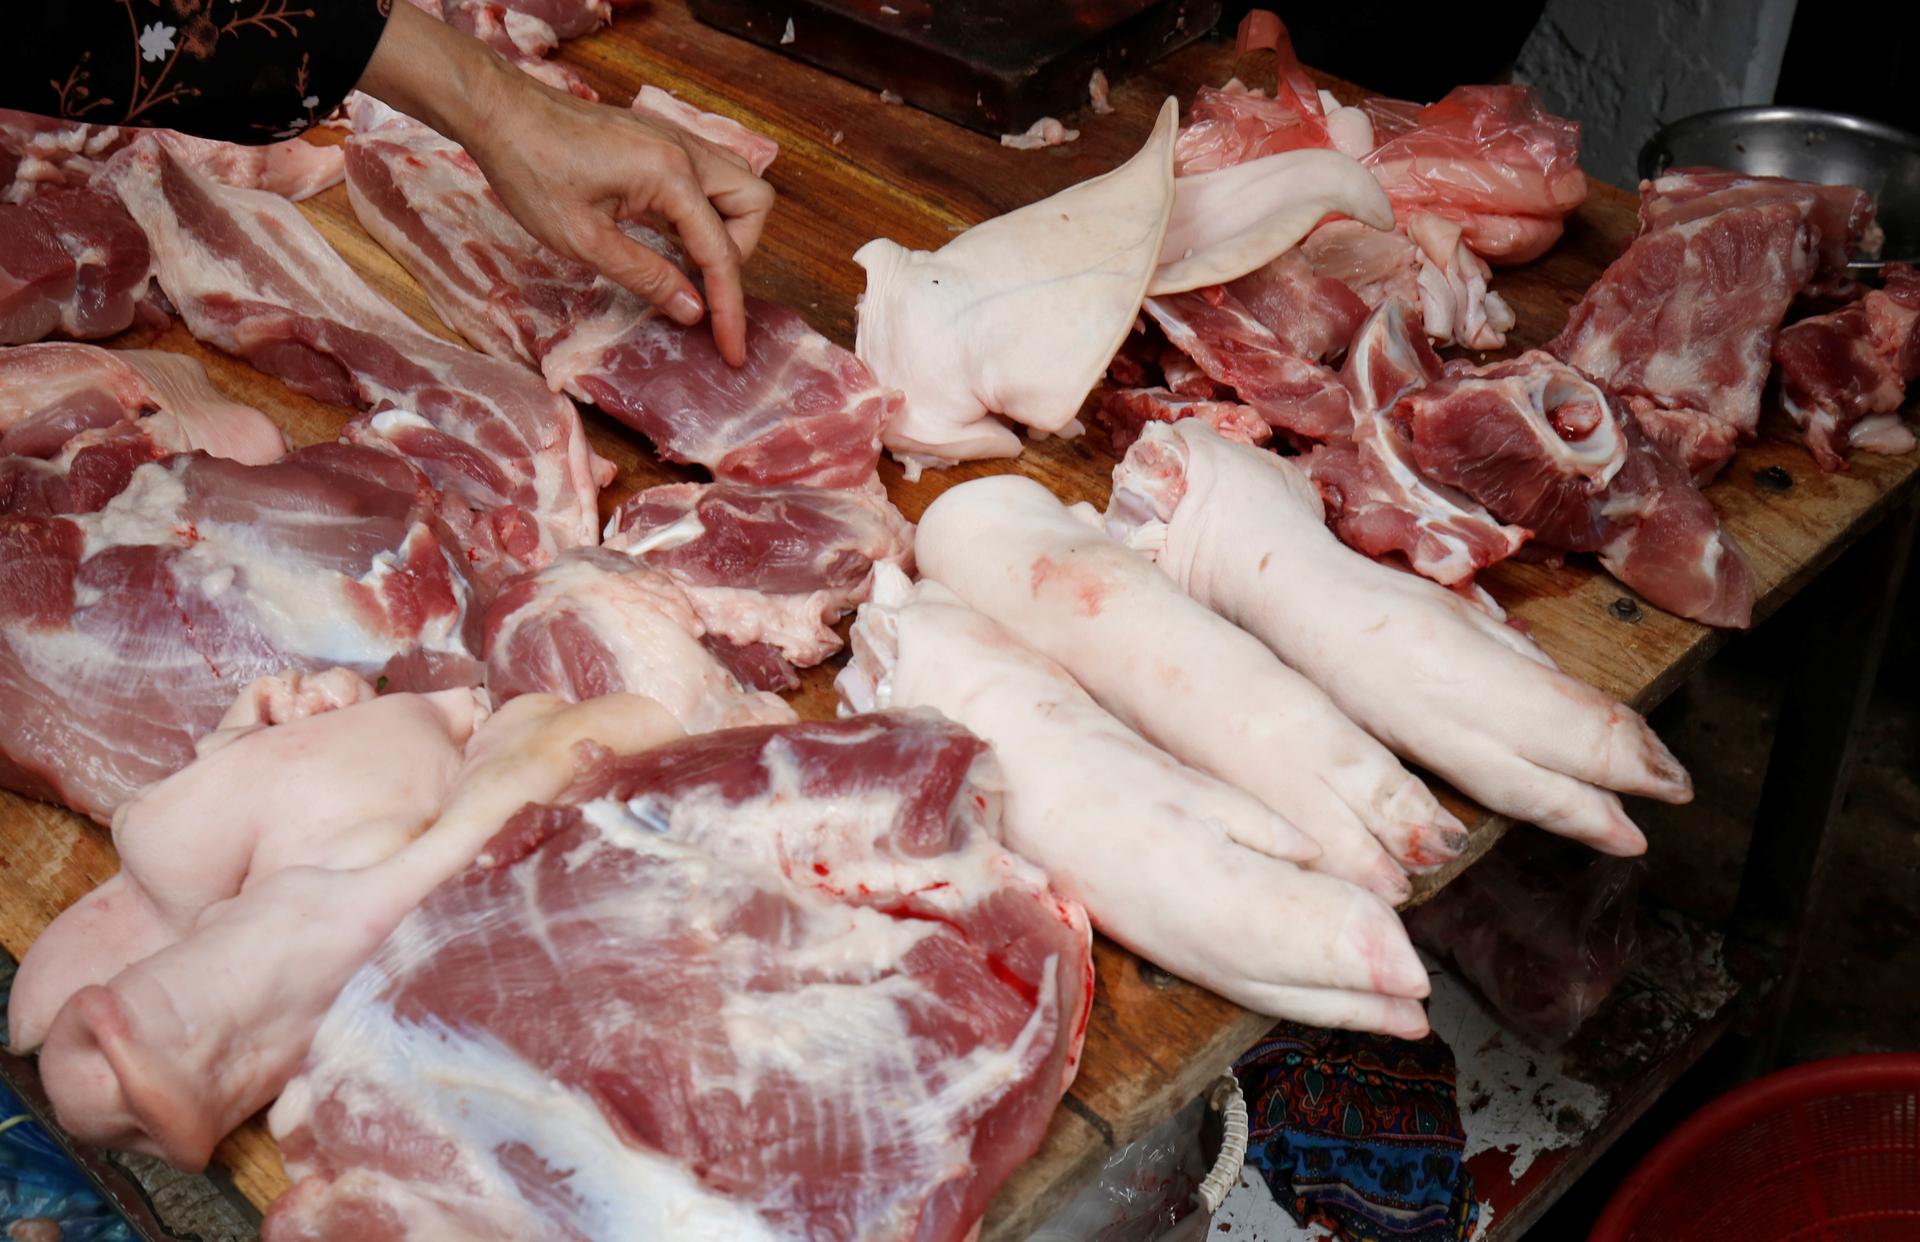 African swine fever outbreak has cut Vietnam hog herd by 20%: USDA undersecretary